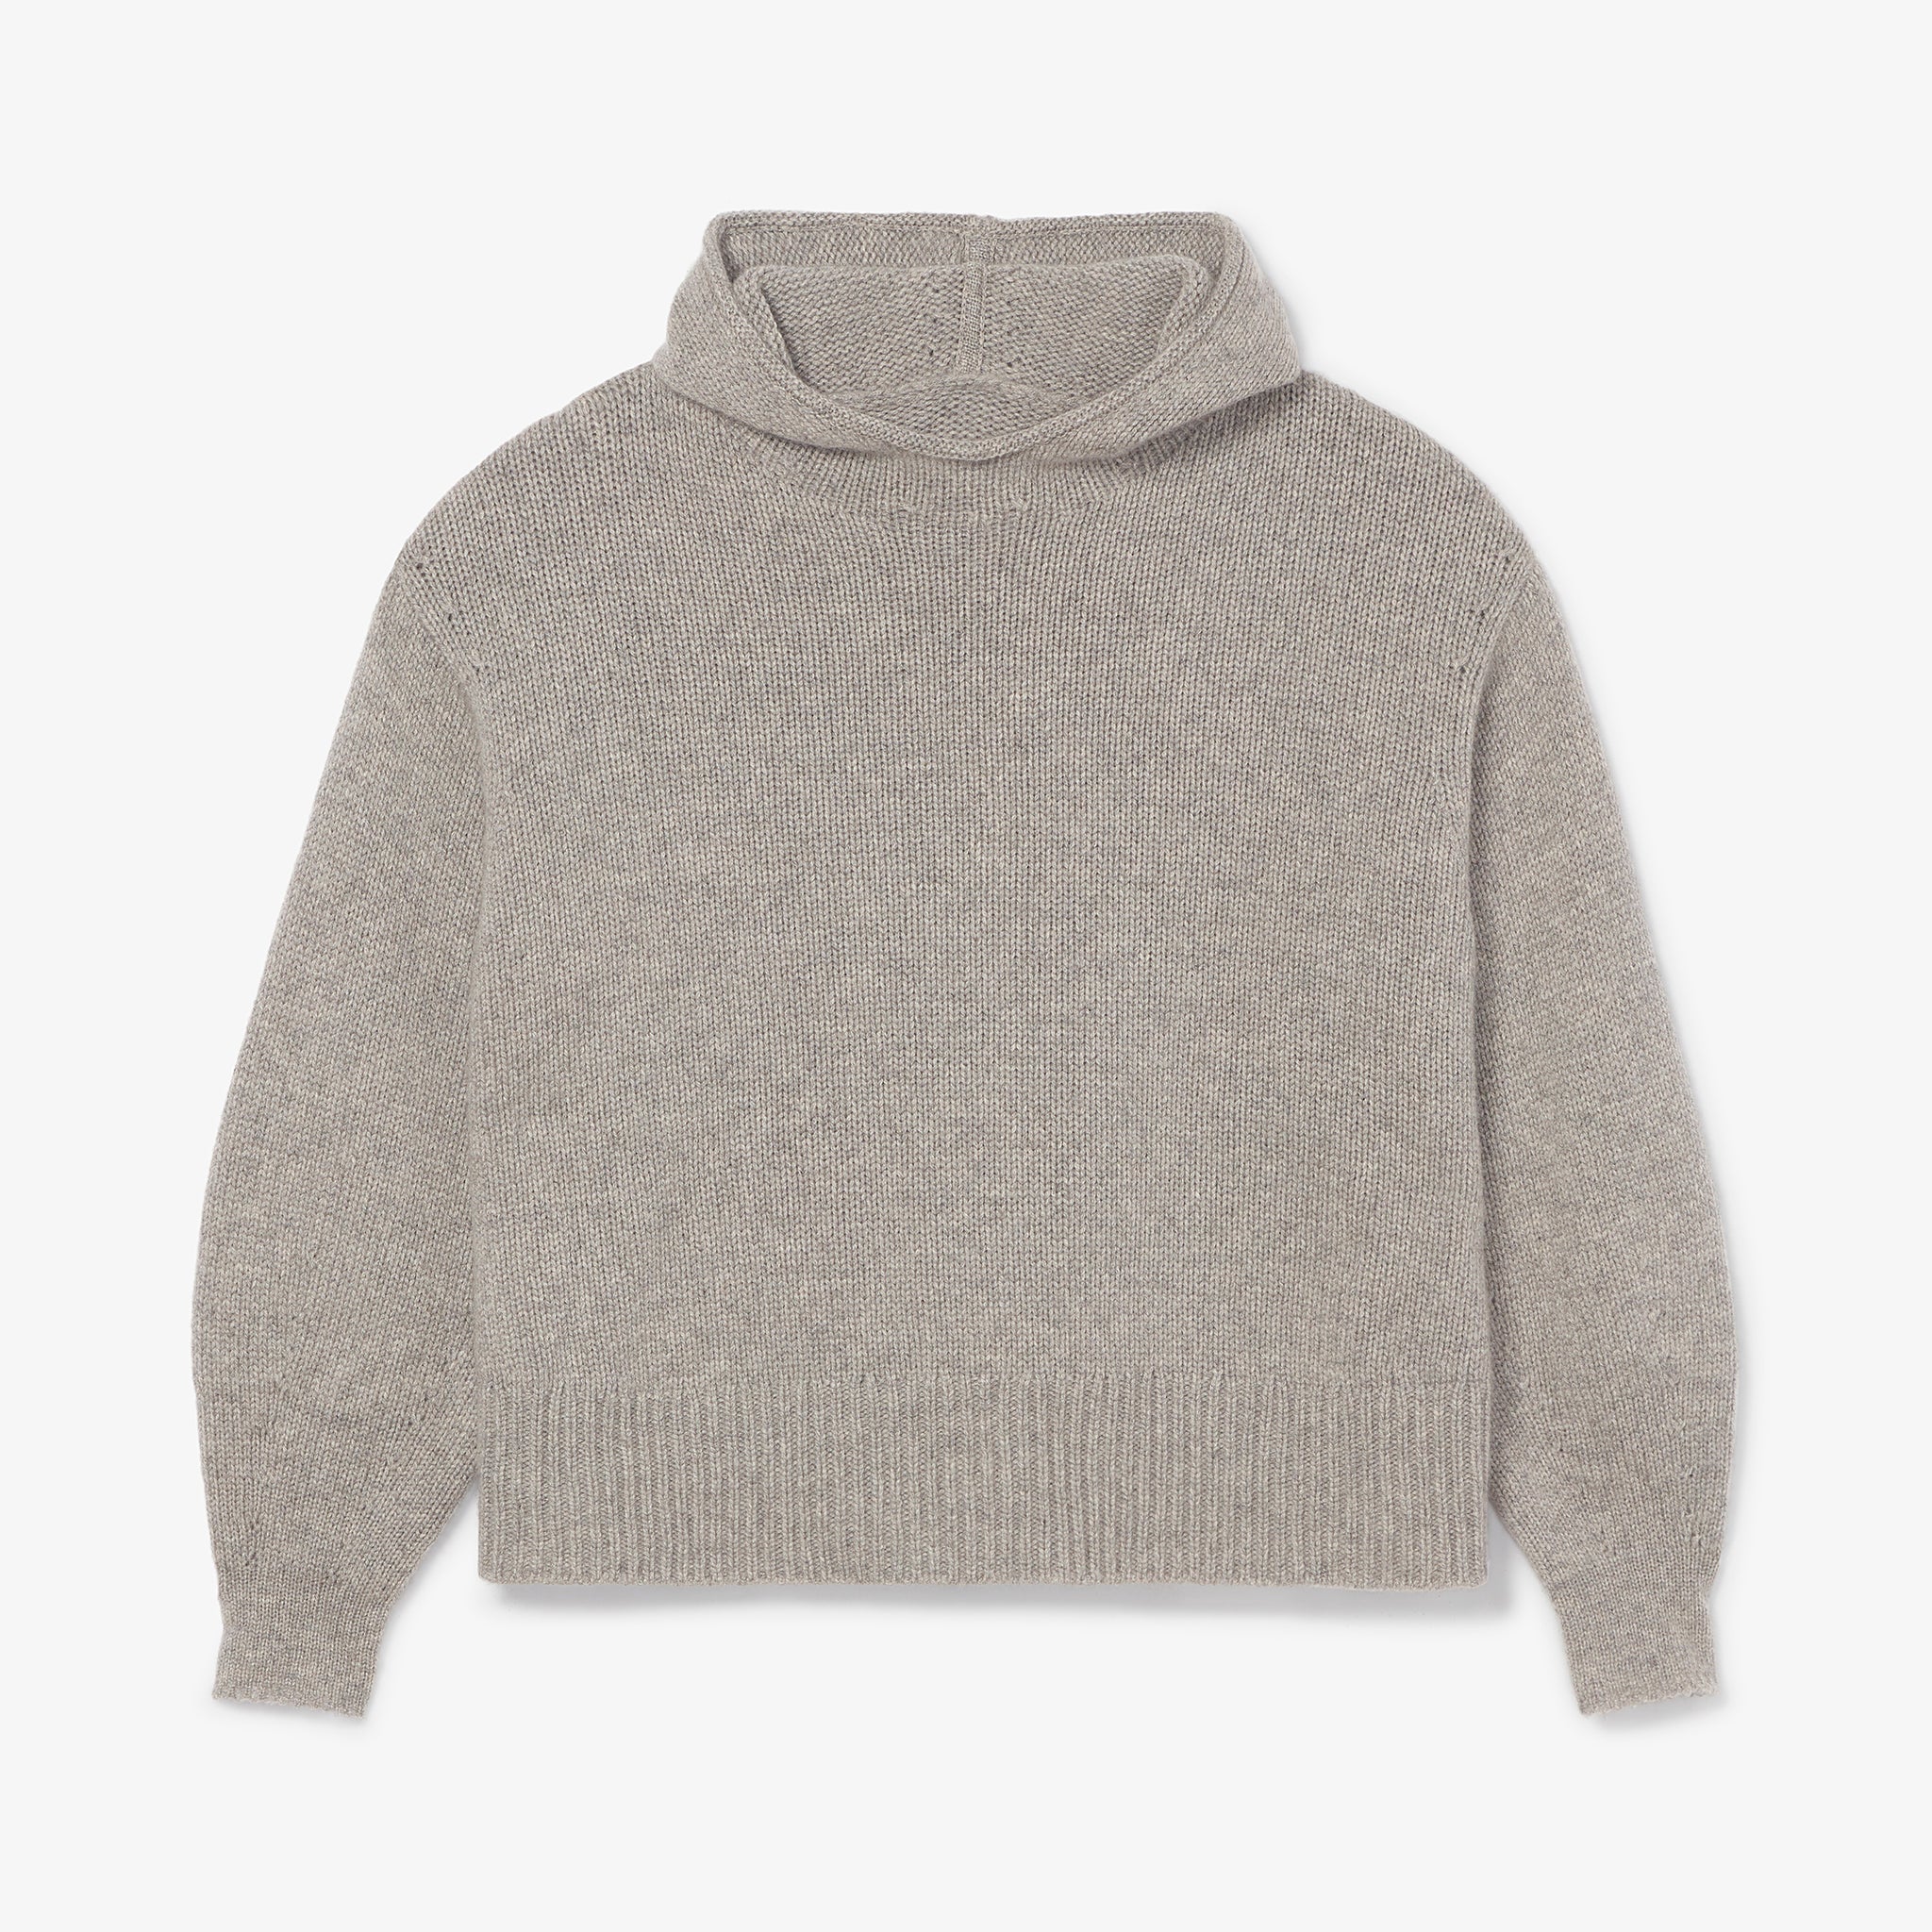 Packshot image of the thomas sweater in stormcloud